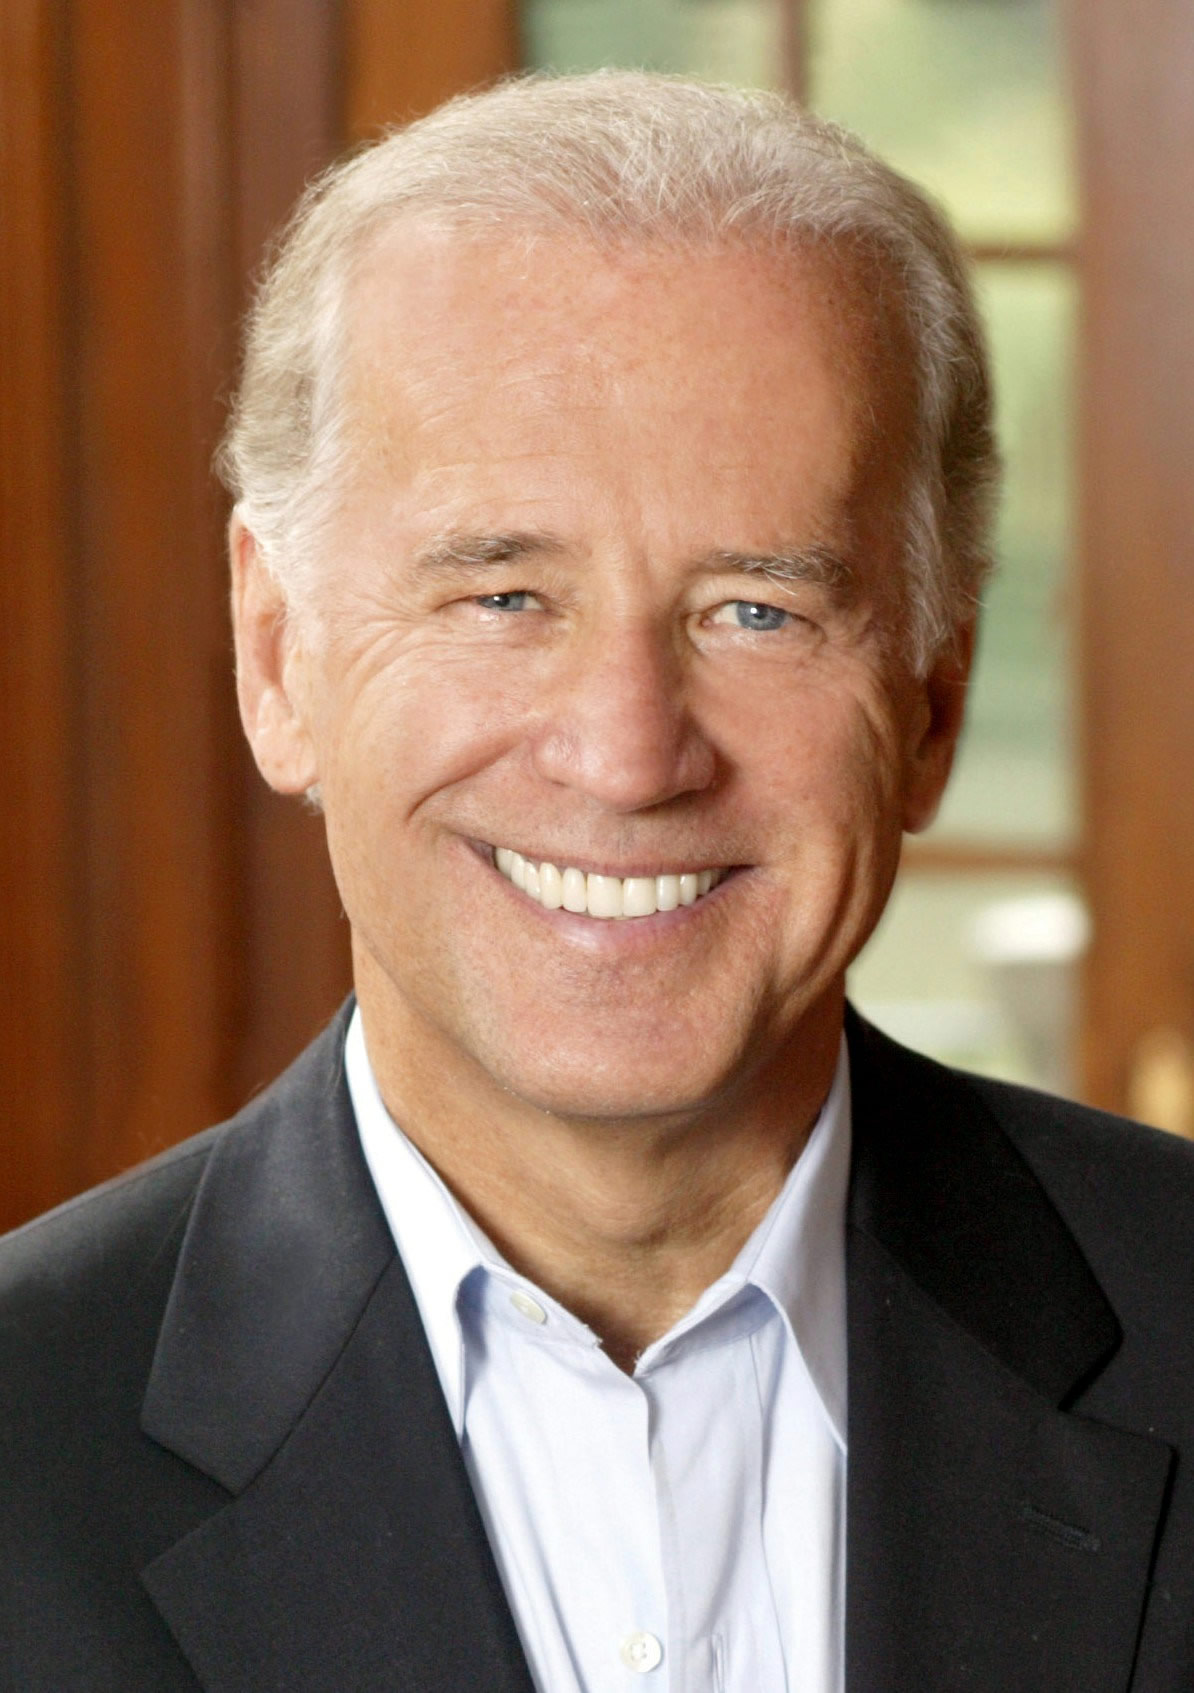 Joe Biden official photo portrait 2 cropped